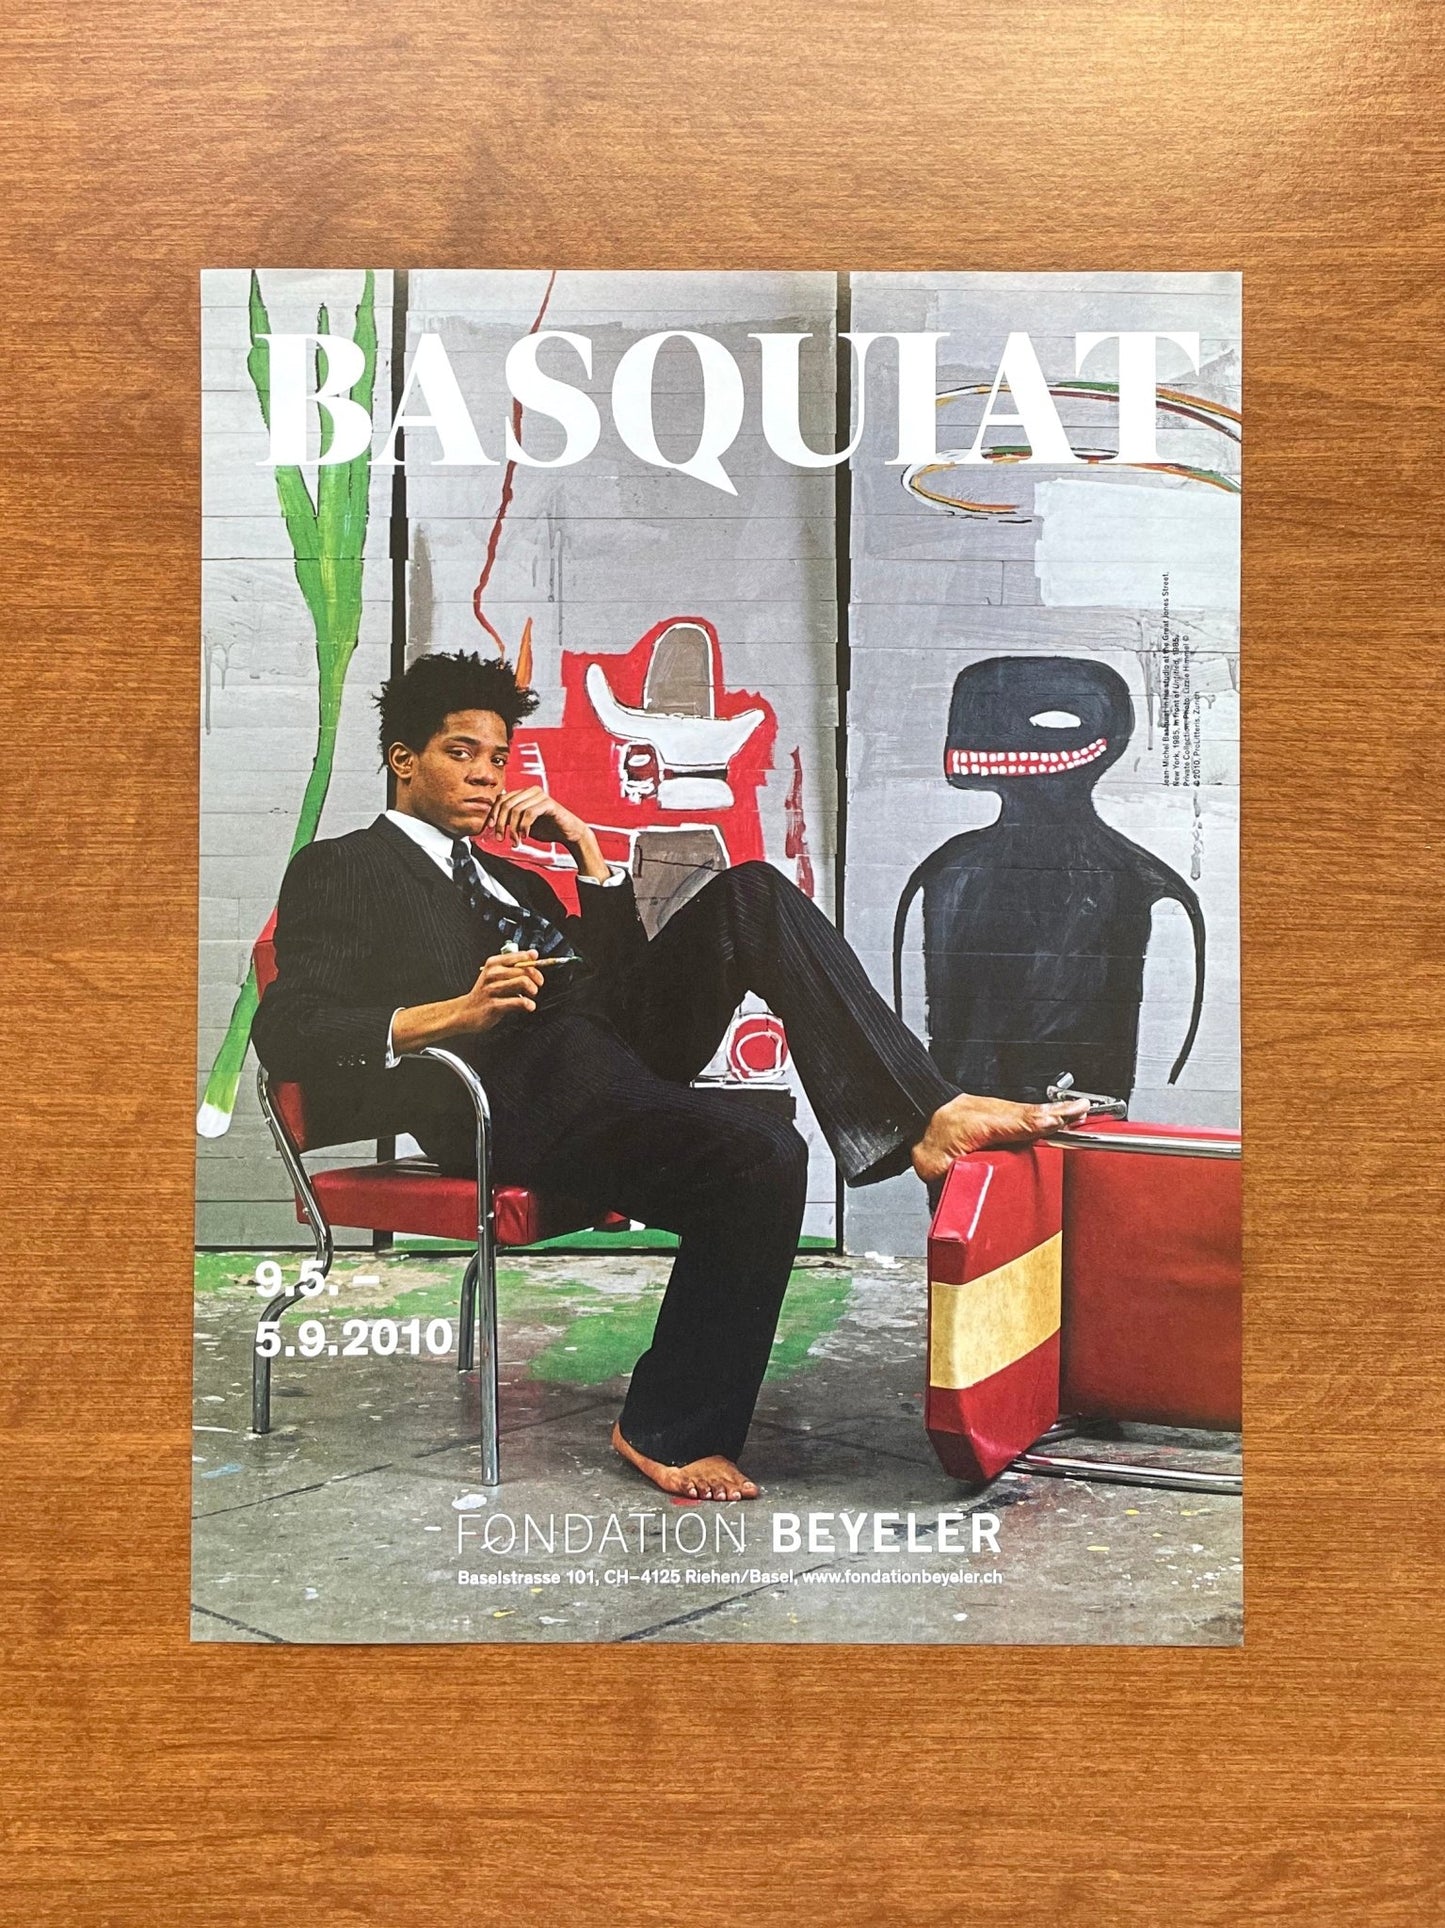 2010 Basquiat Retrospective Advertisement